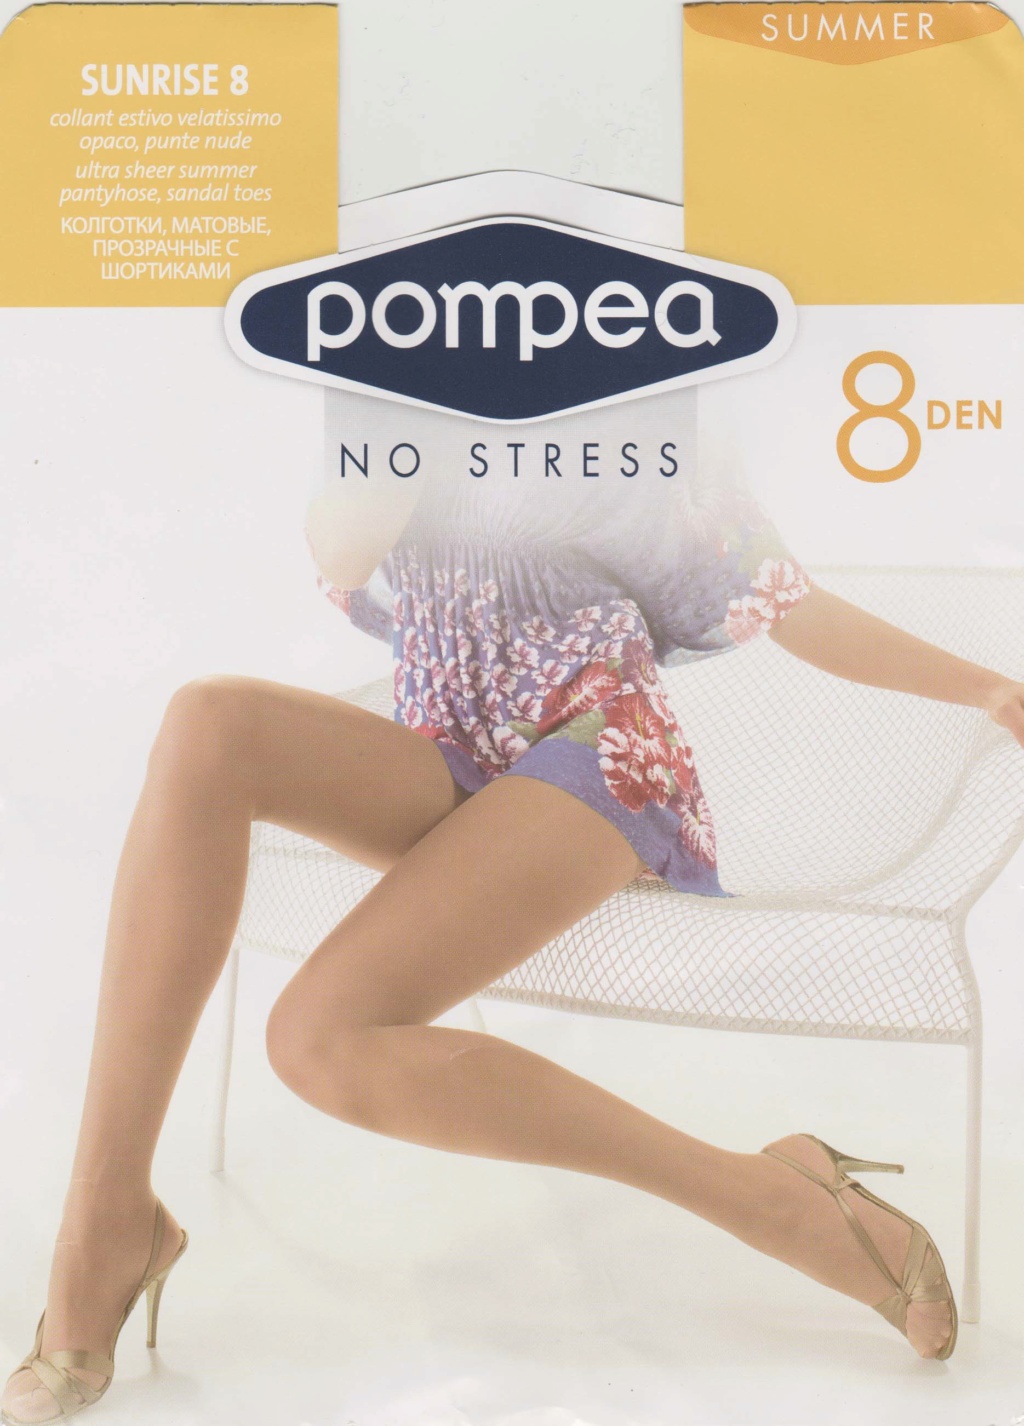 Pompea No Stress 8 DEN Skense12